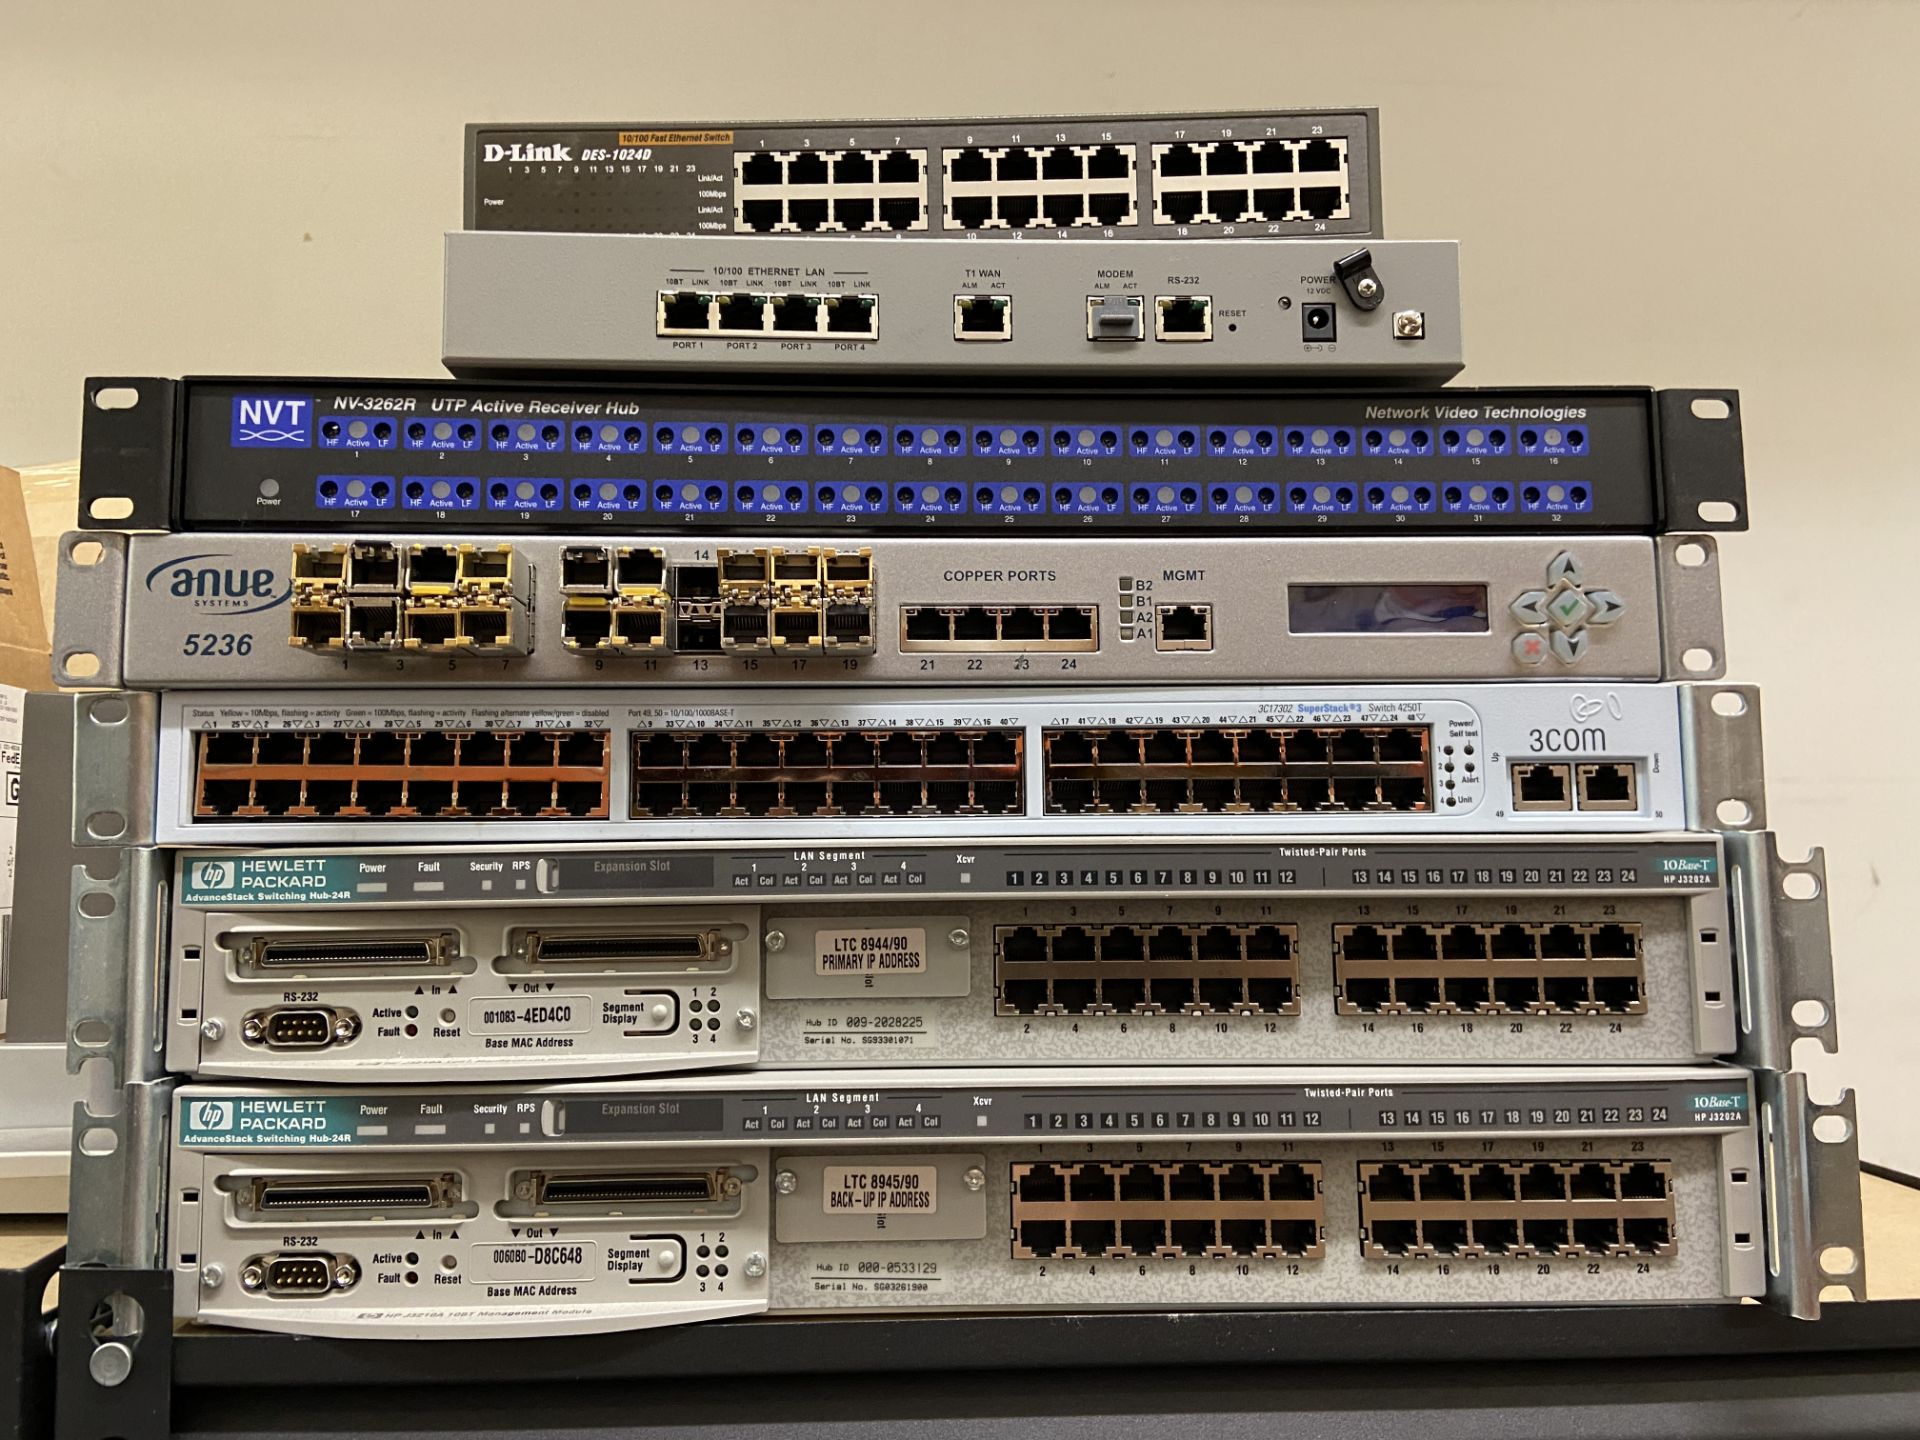 7 Networking Equipment units: HP, D-Link, NVT, Anue, Etc